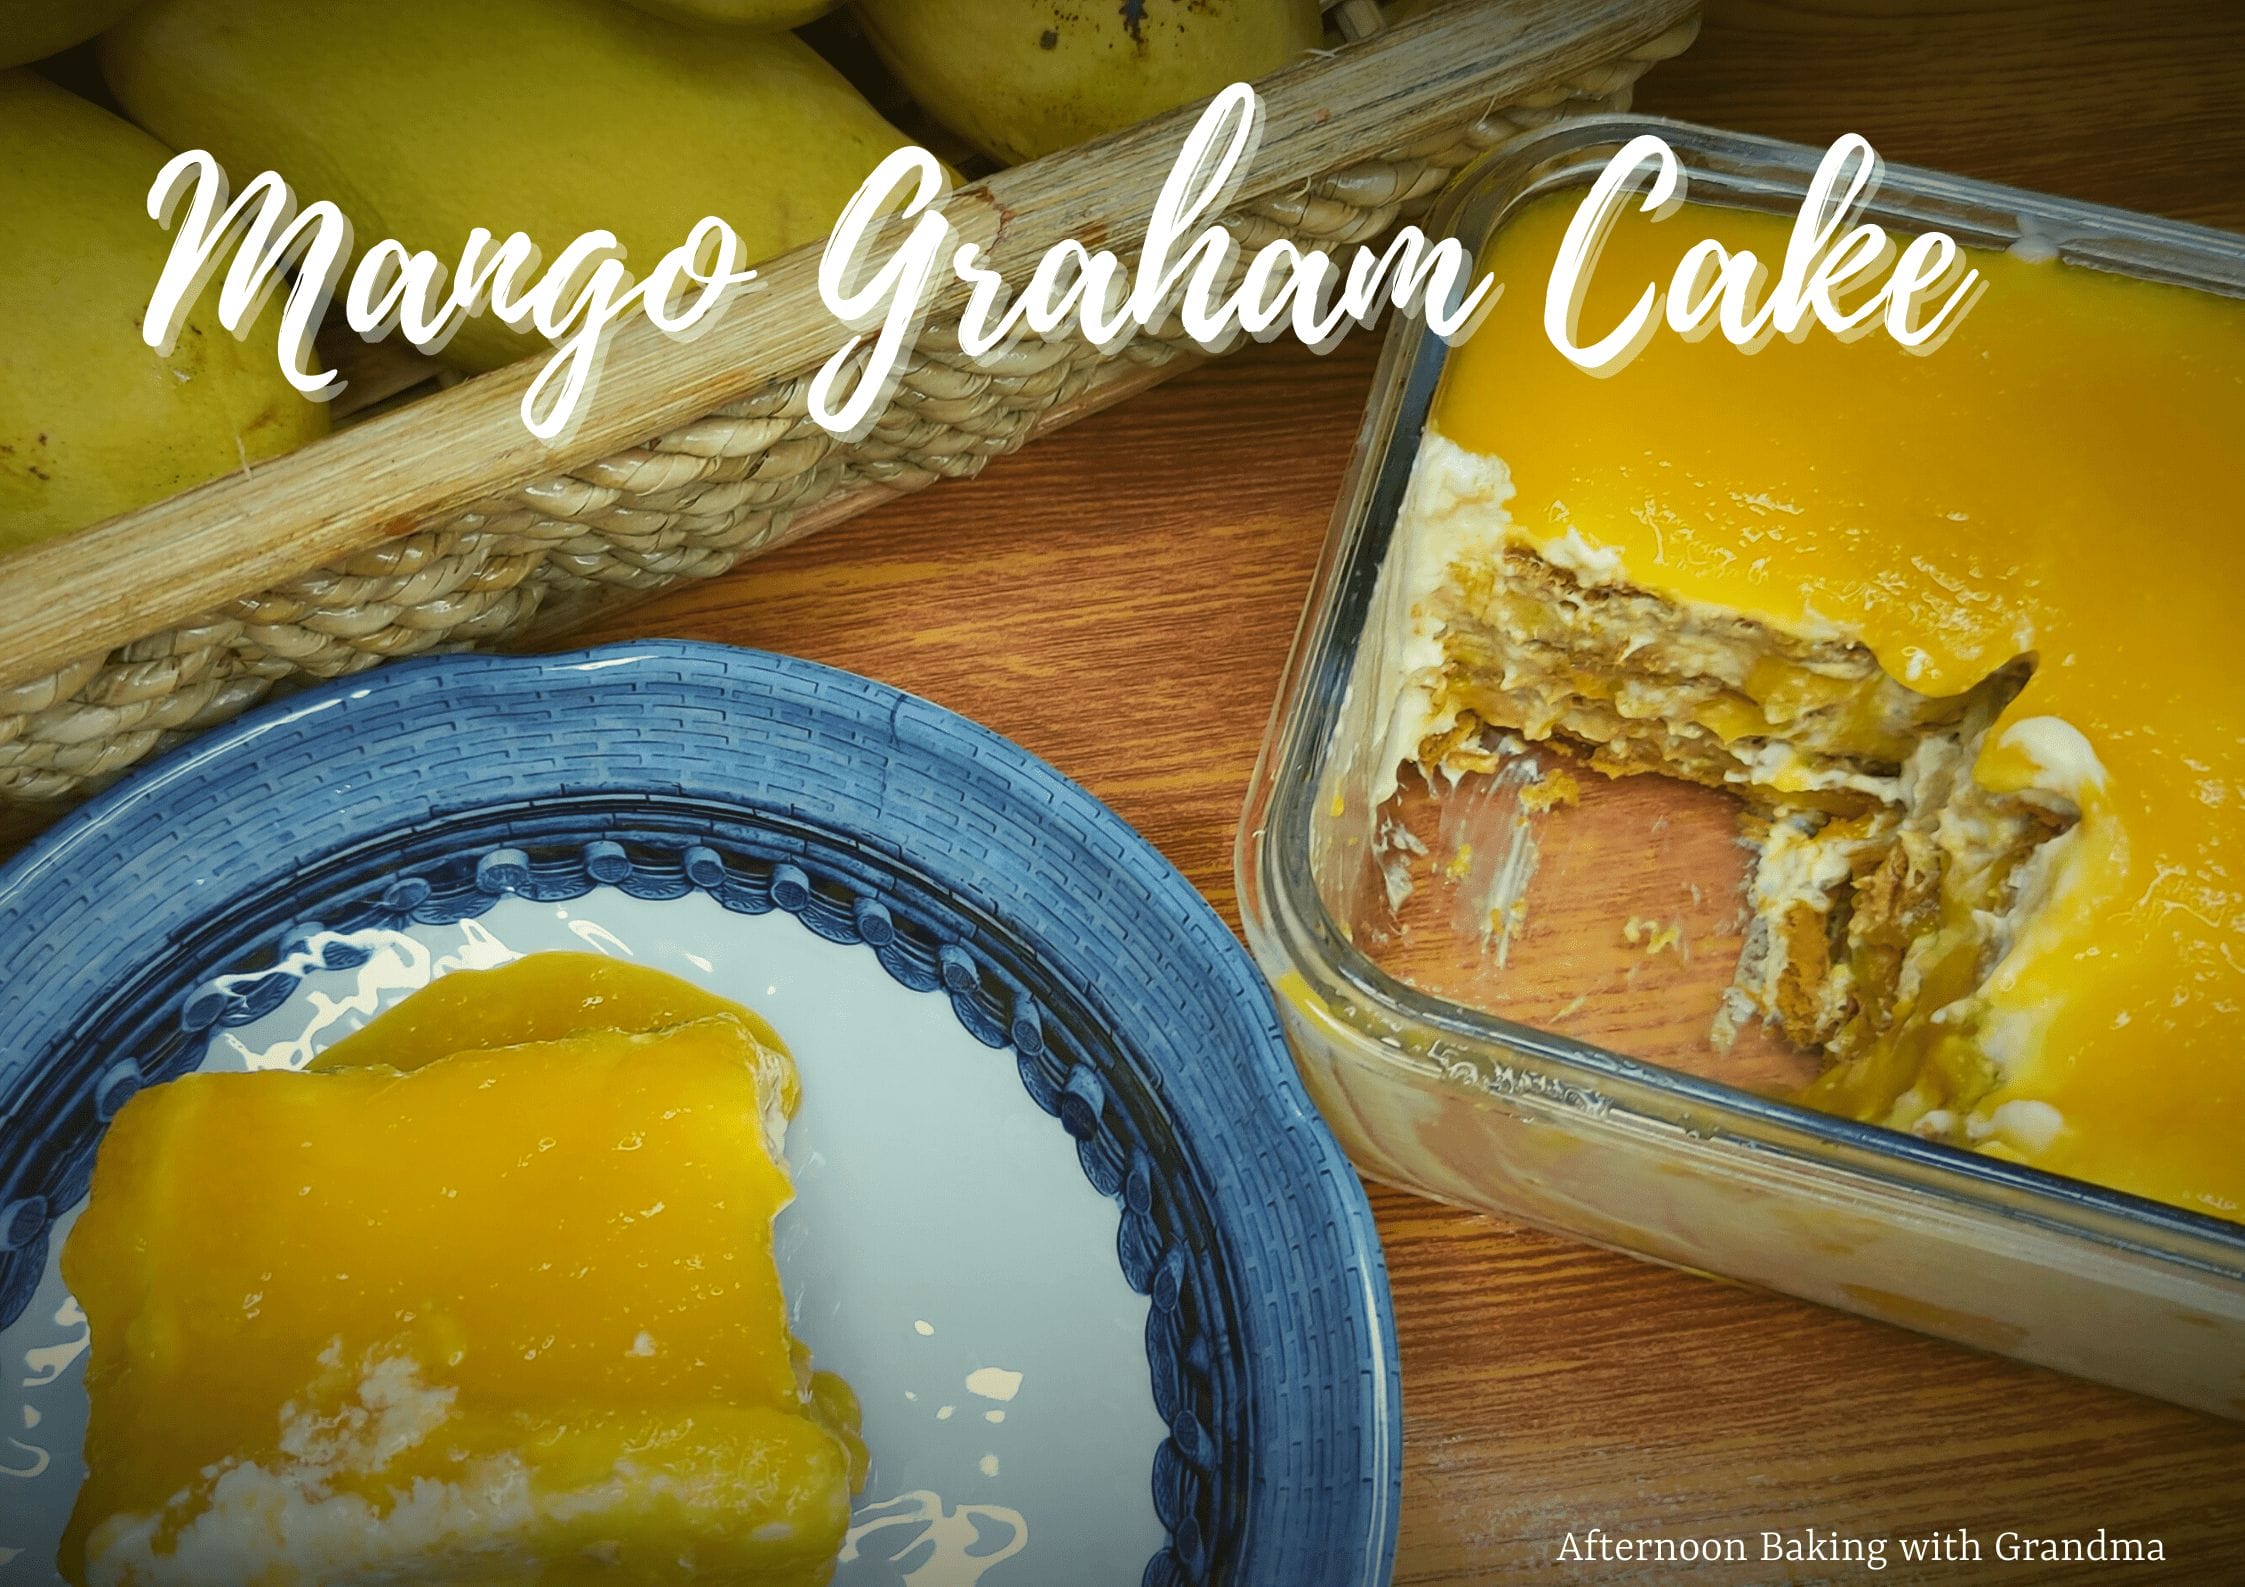 business plan about mango graham cake